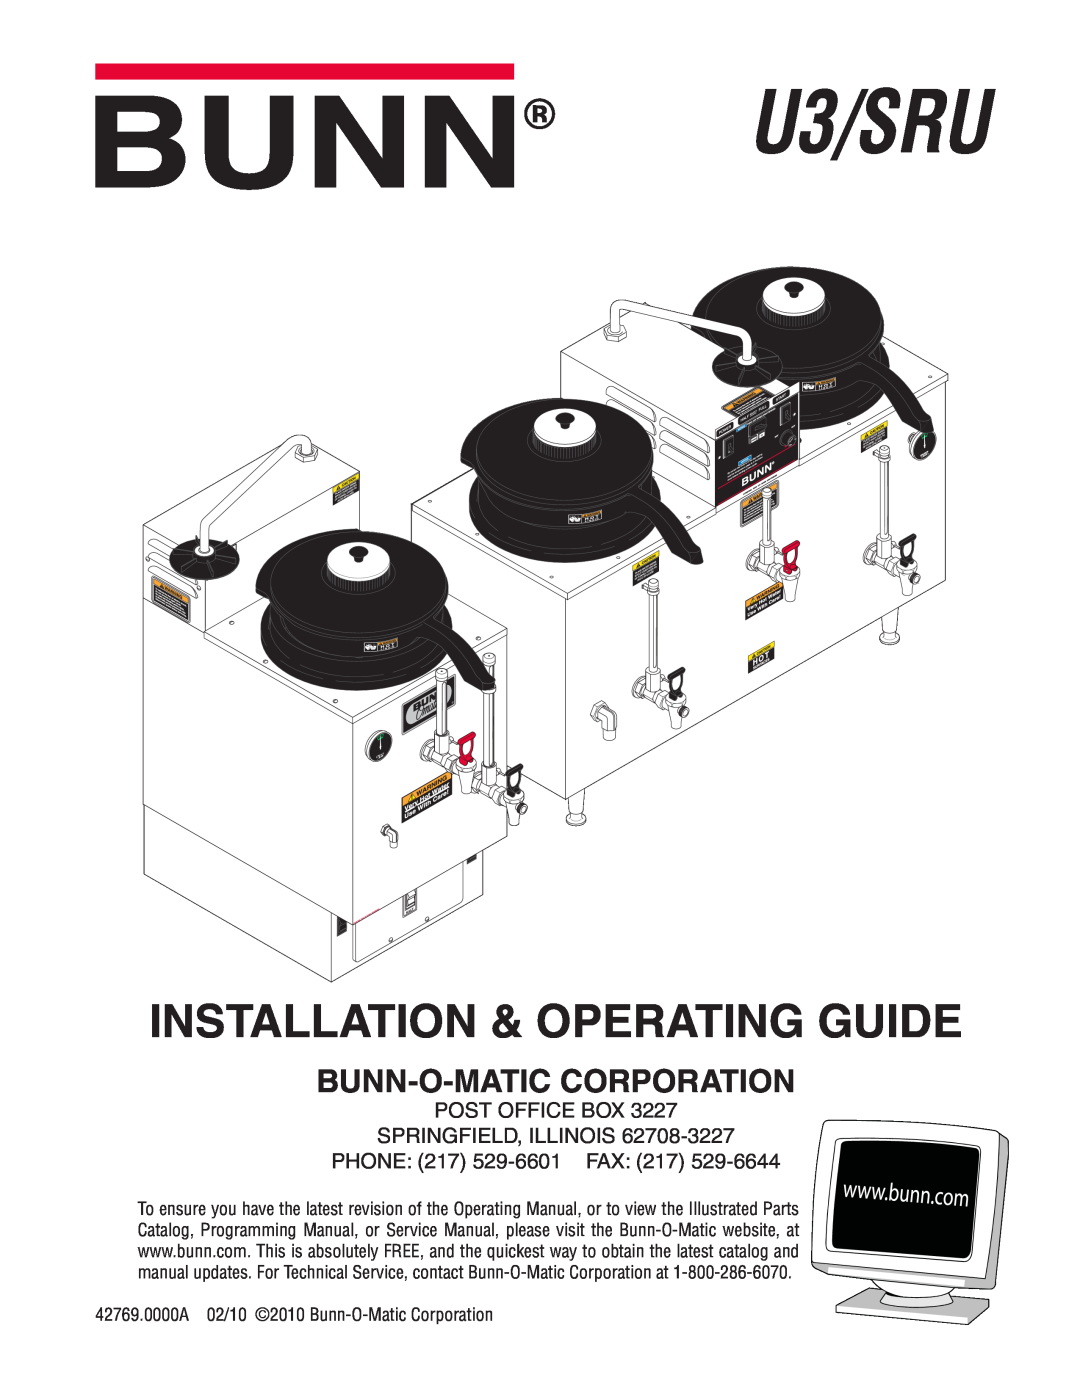 Bunn U3/SRU service manual Installation & Operating Guide, Bunn-O-Matic Corporation 